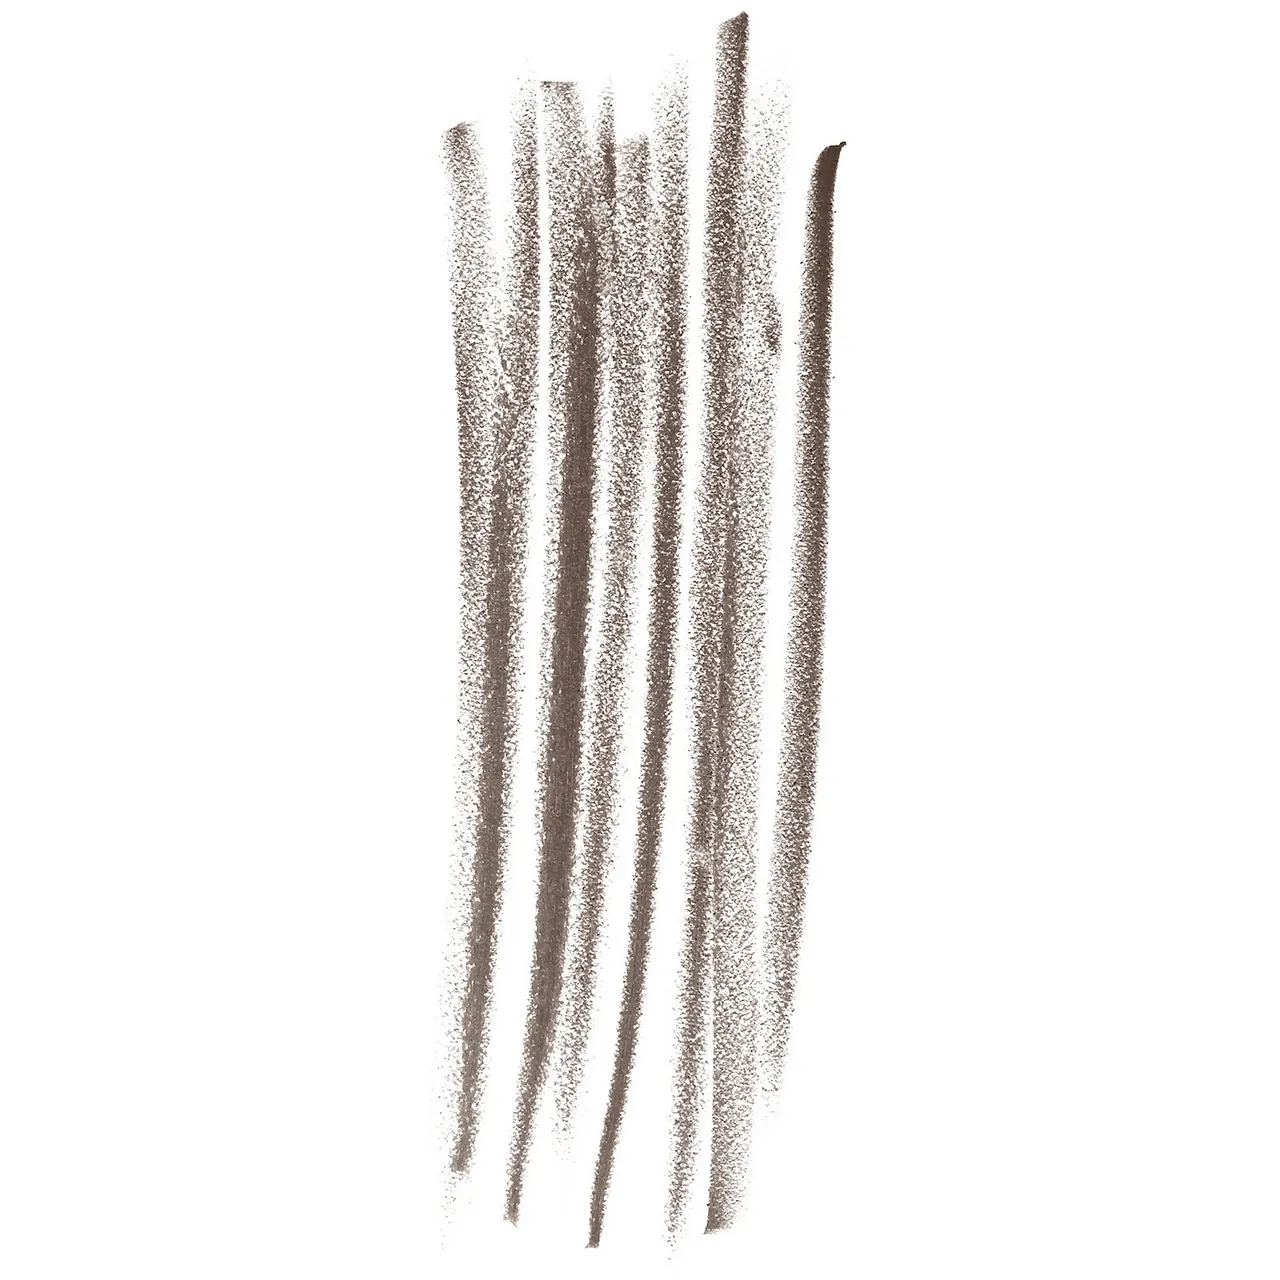 Bobbi Brown Long-Wear Brow Pencil 1.15g (Various Shades) - Blonde